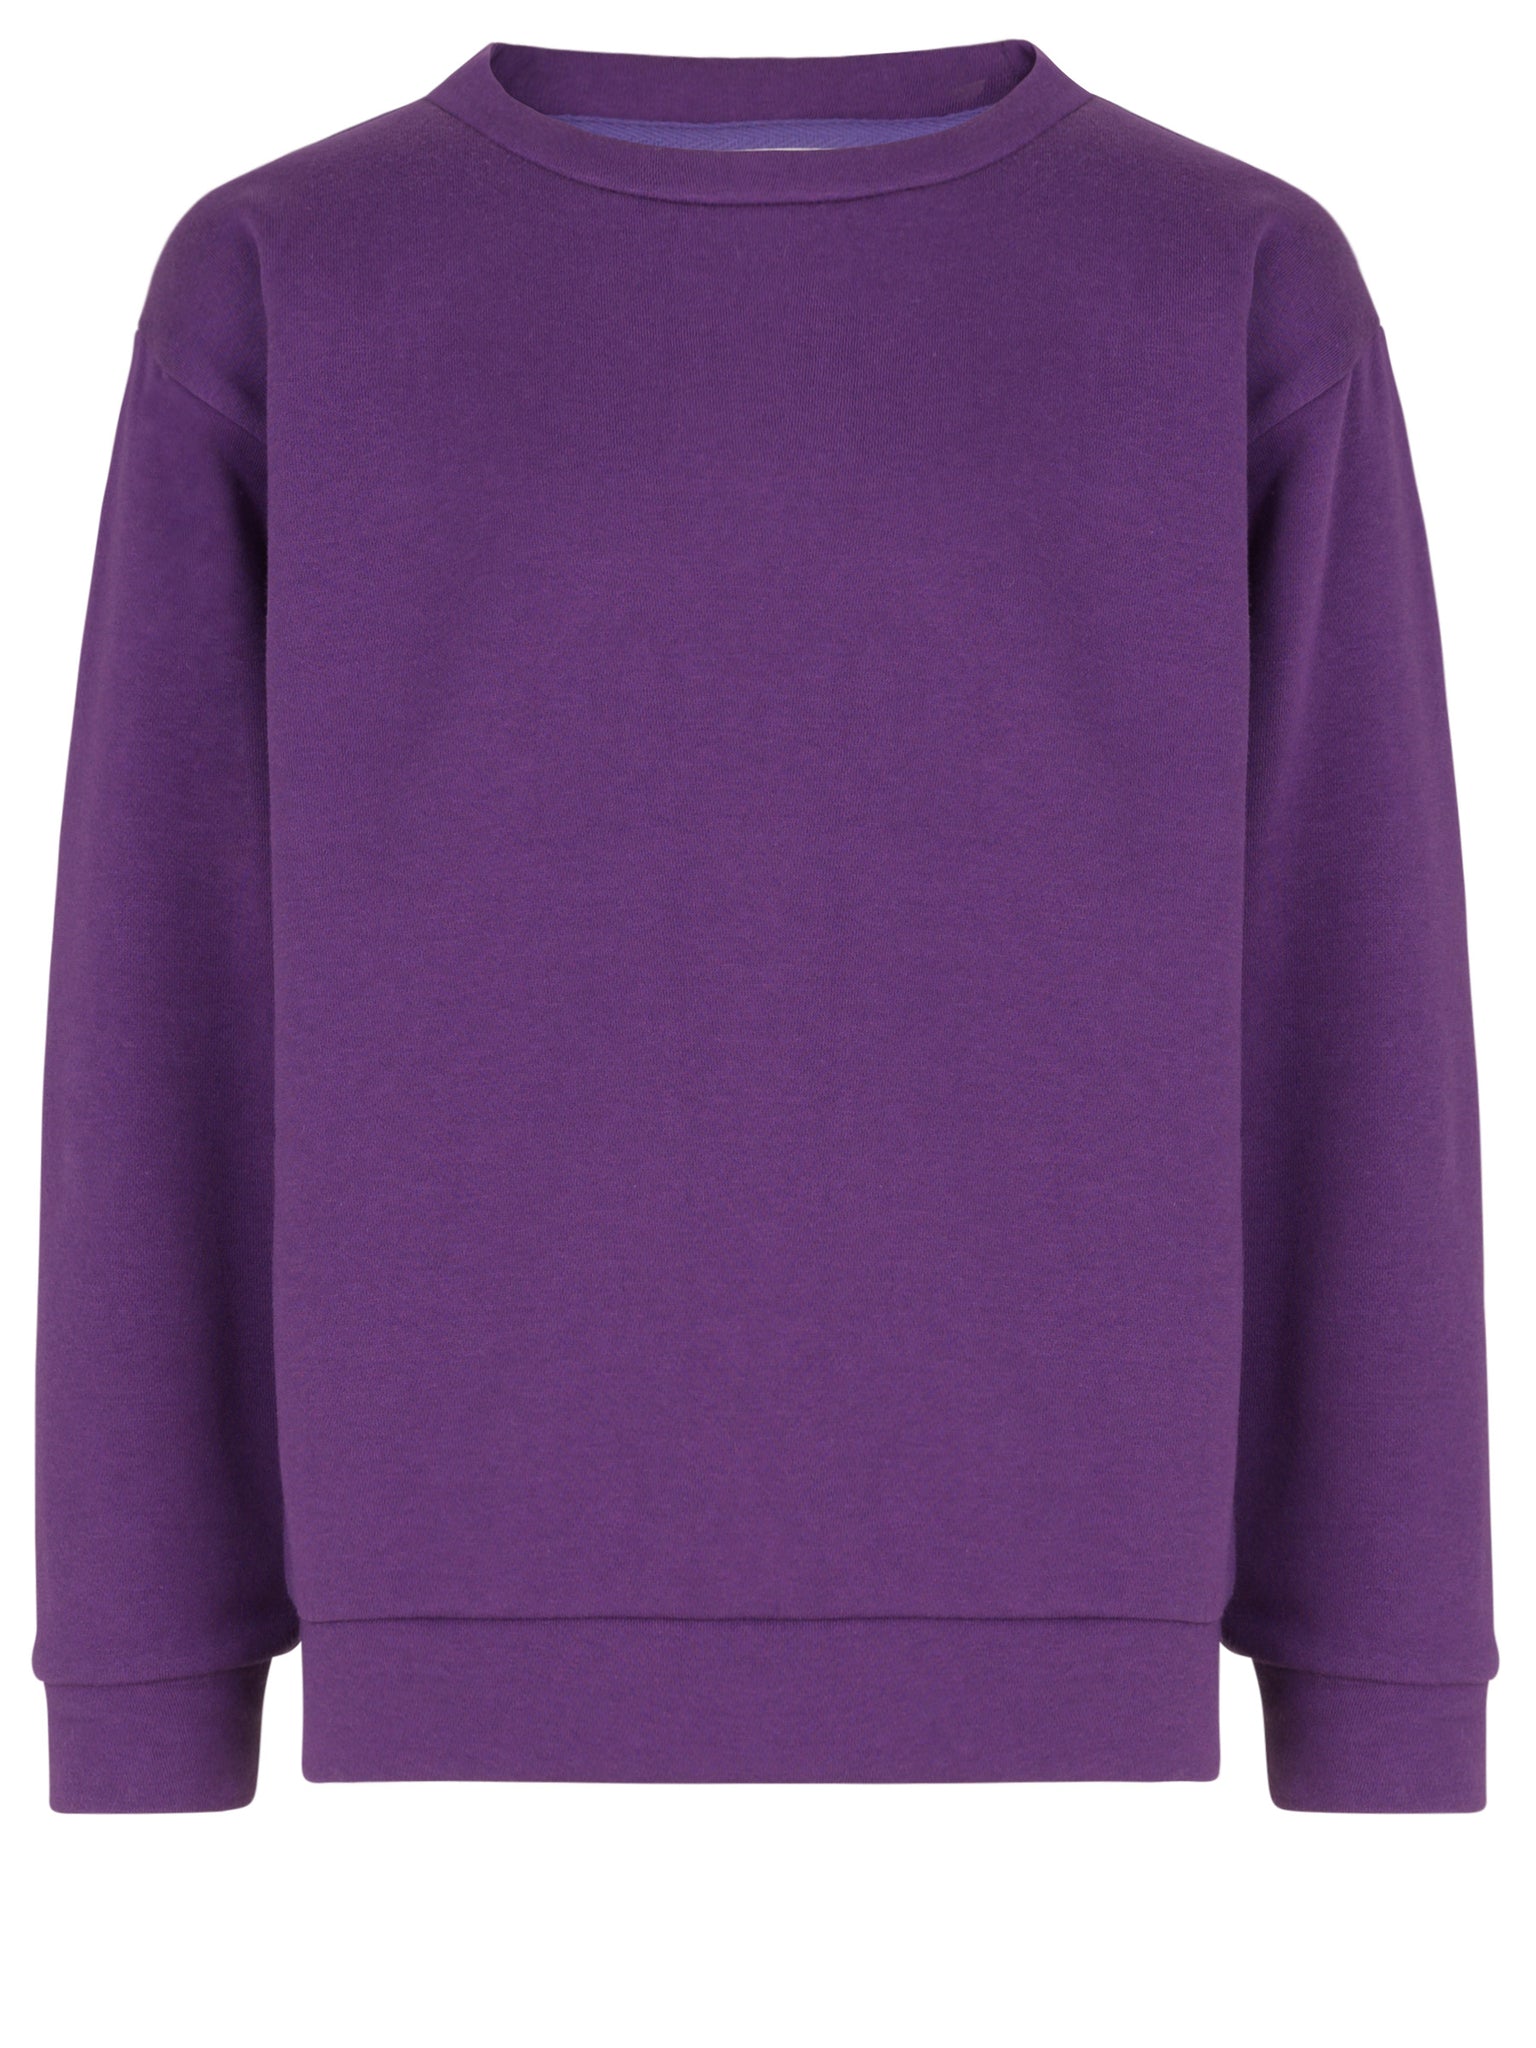 Sweatshirt for girls